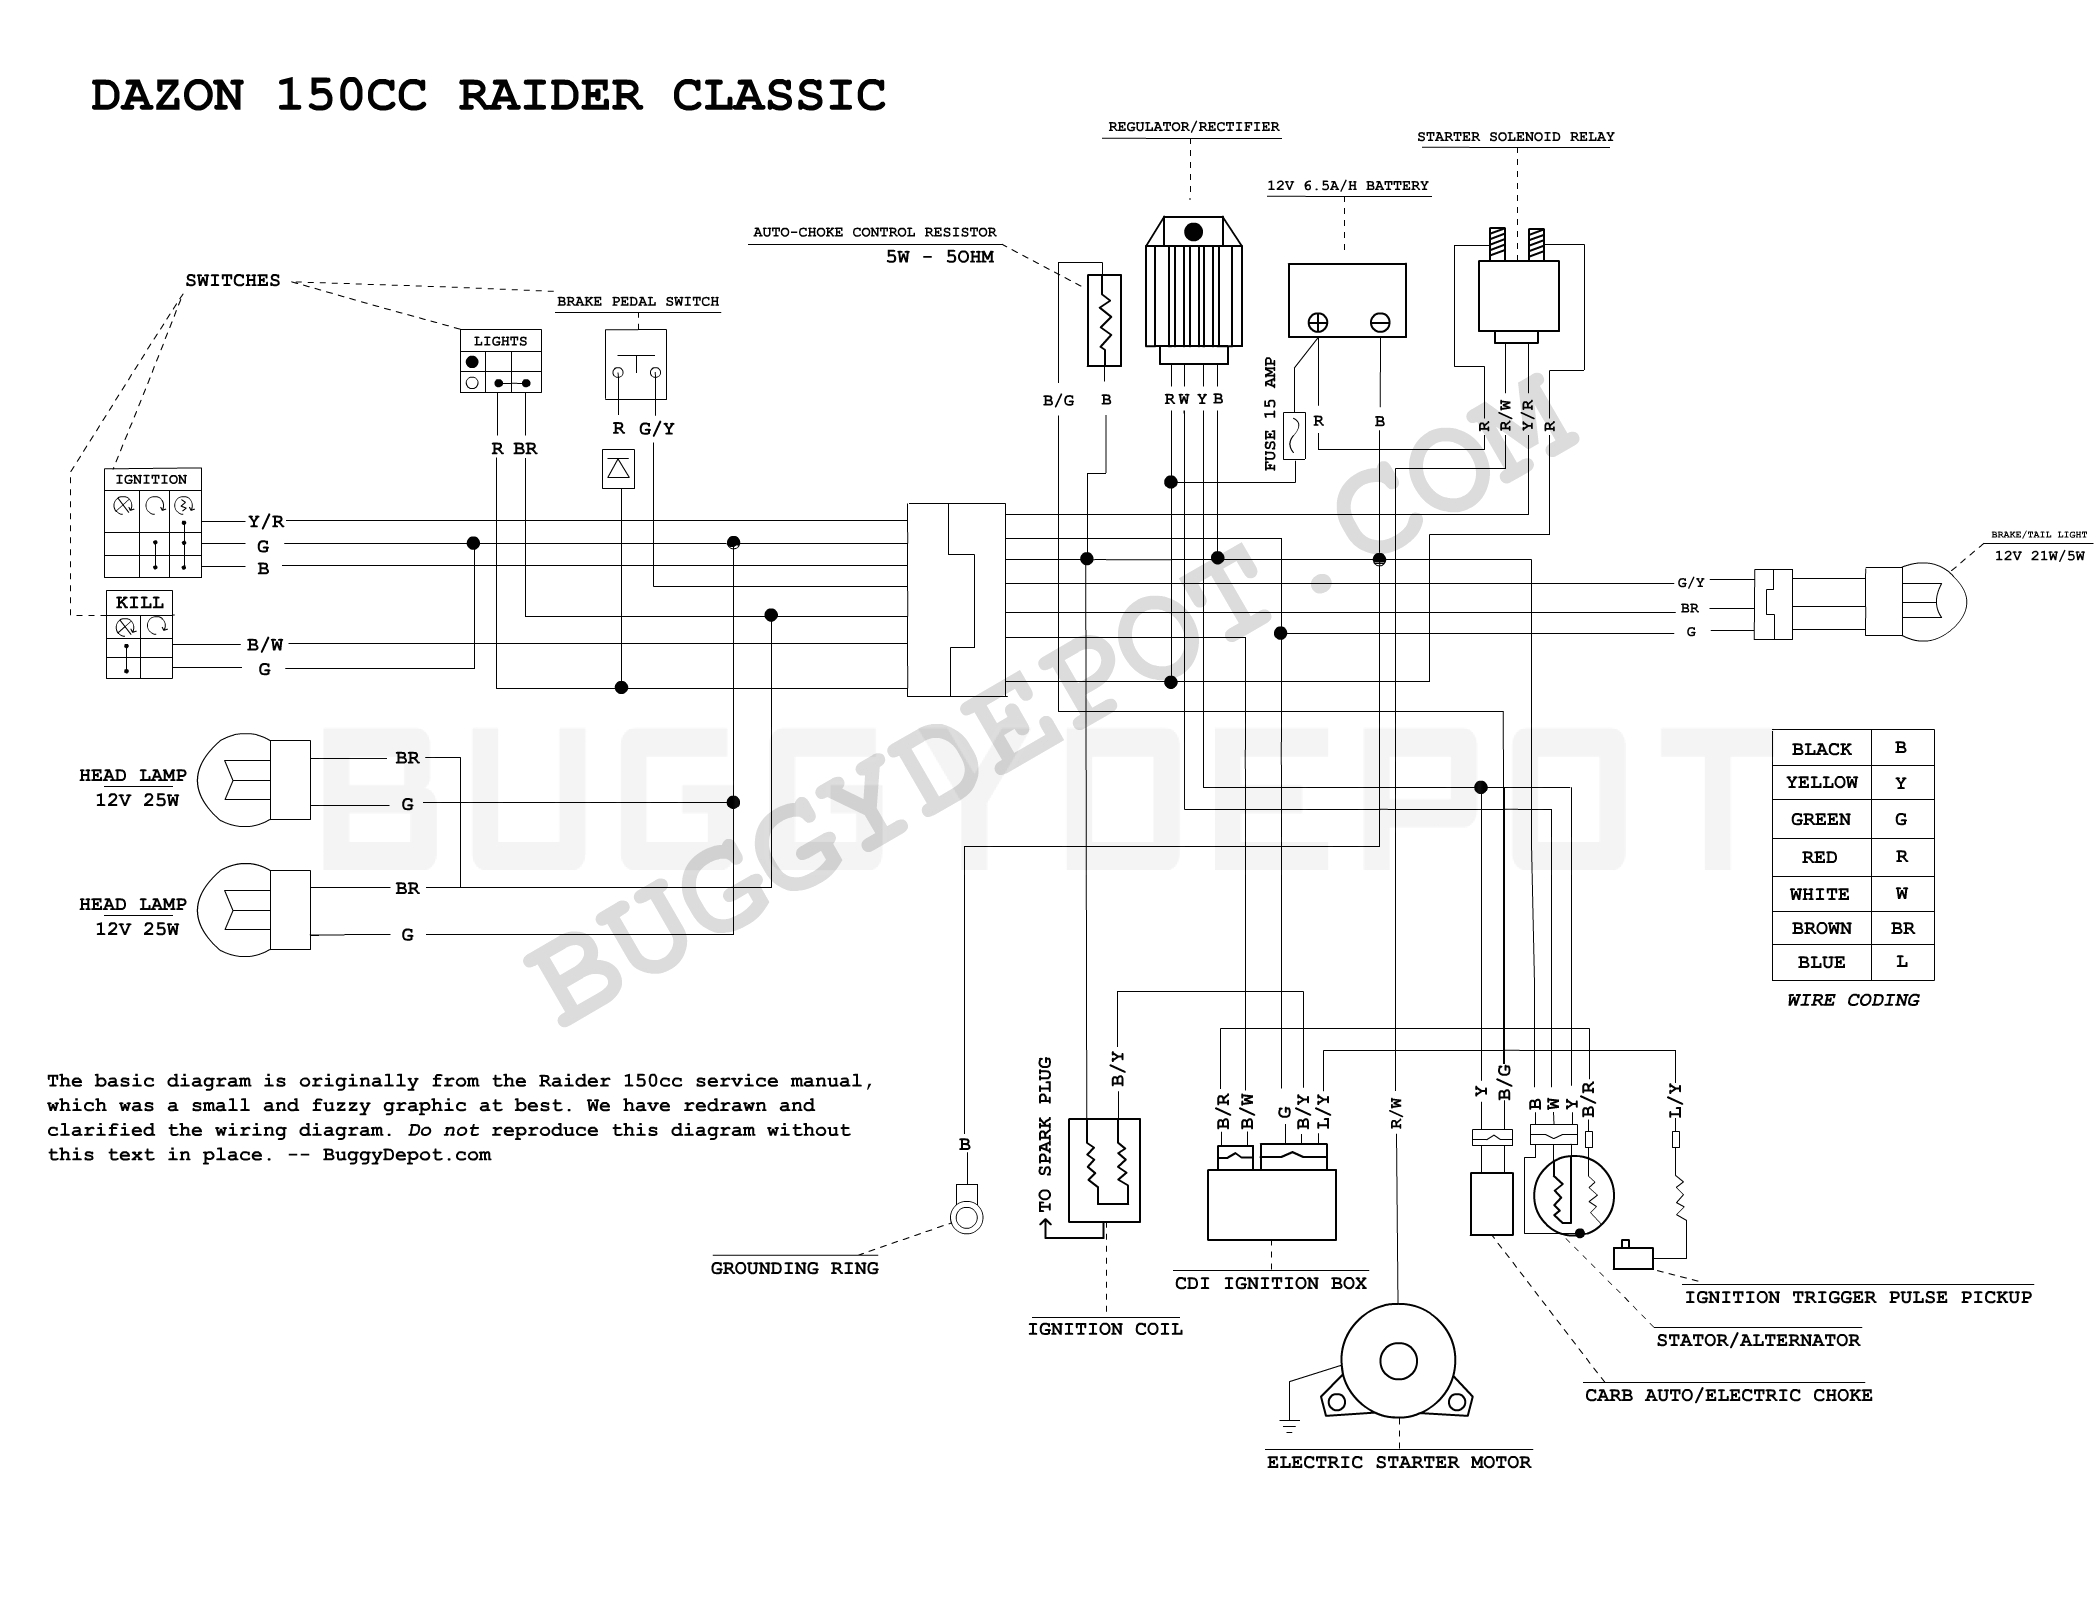 dc cdi ignition wiring diagram wiring librarydazon raider classic u2013 wiring diagram